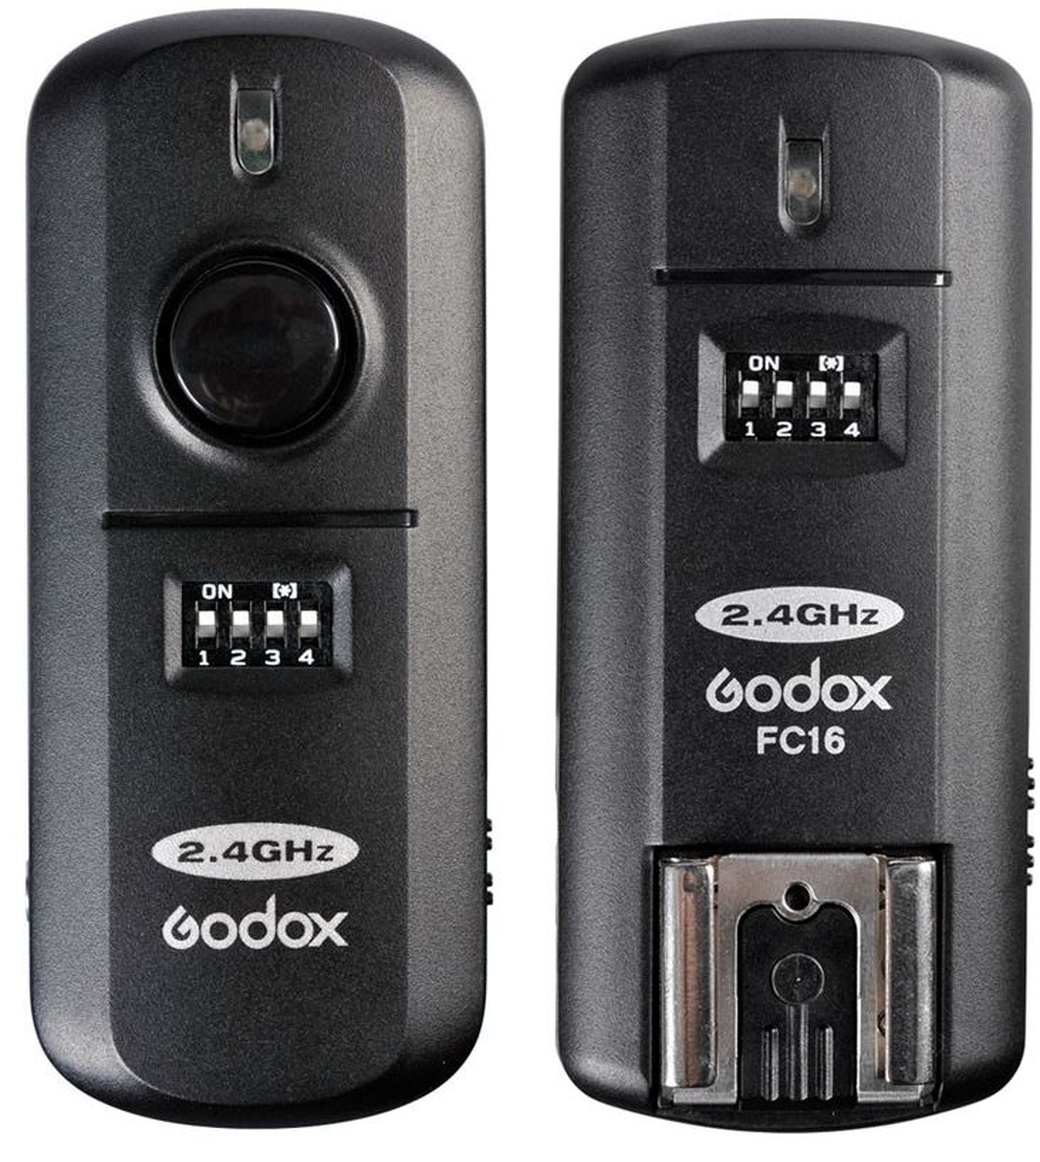 Пульт ДУ Godox FC-16 2,4 ГГц 16 для Nikon D5100 D90 D7000 D7100 D5200 D3100 D3200 фото